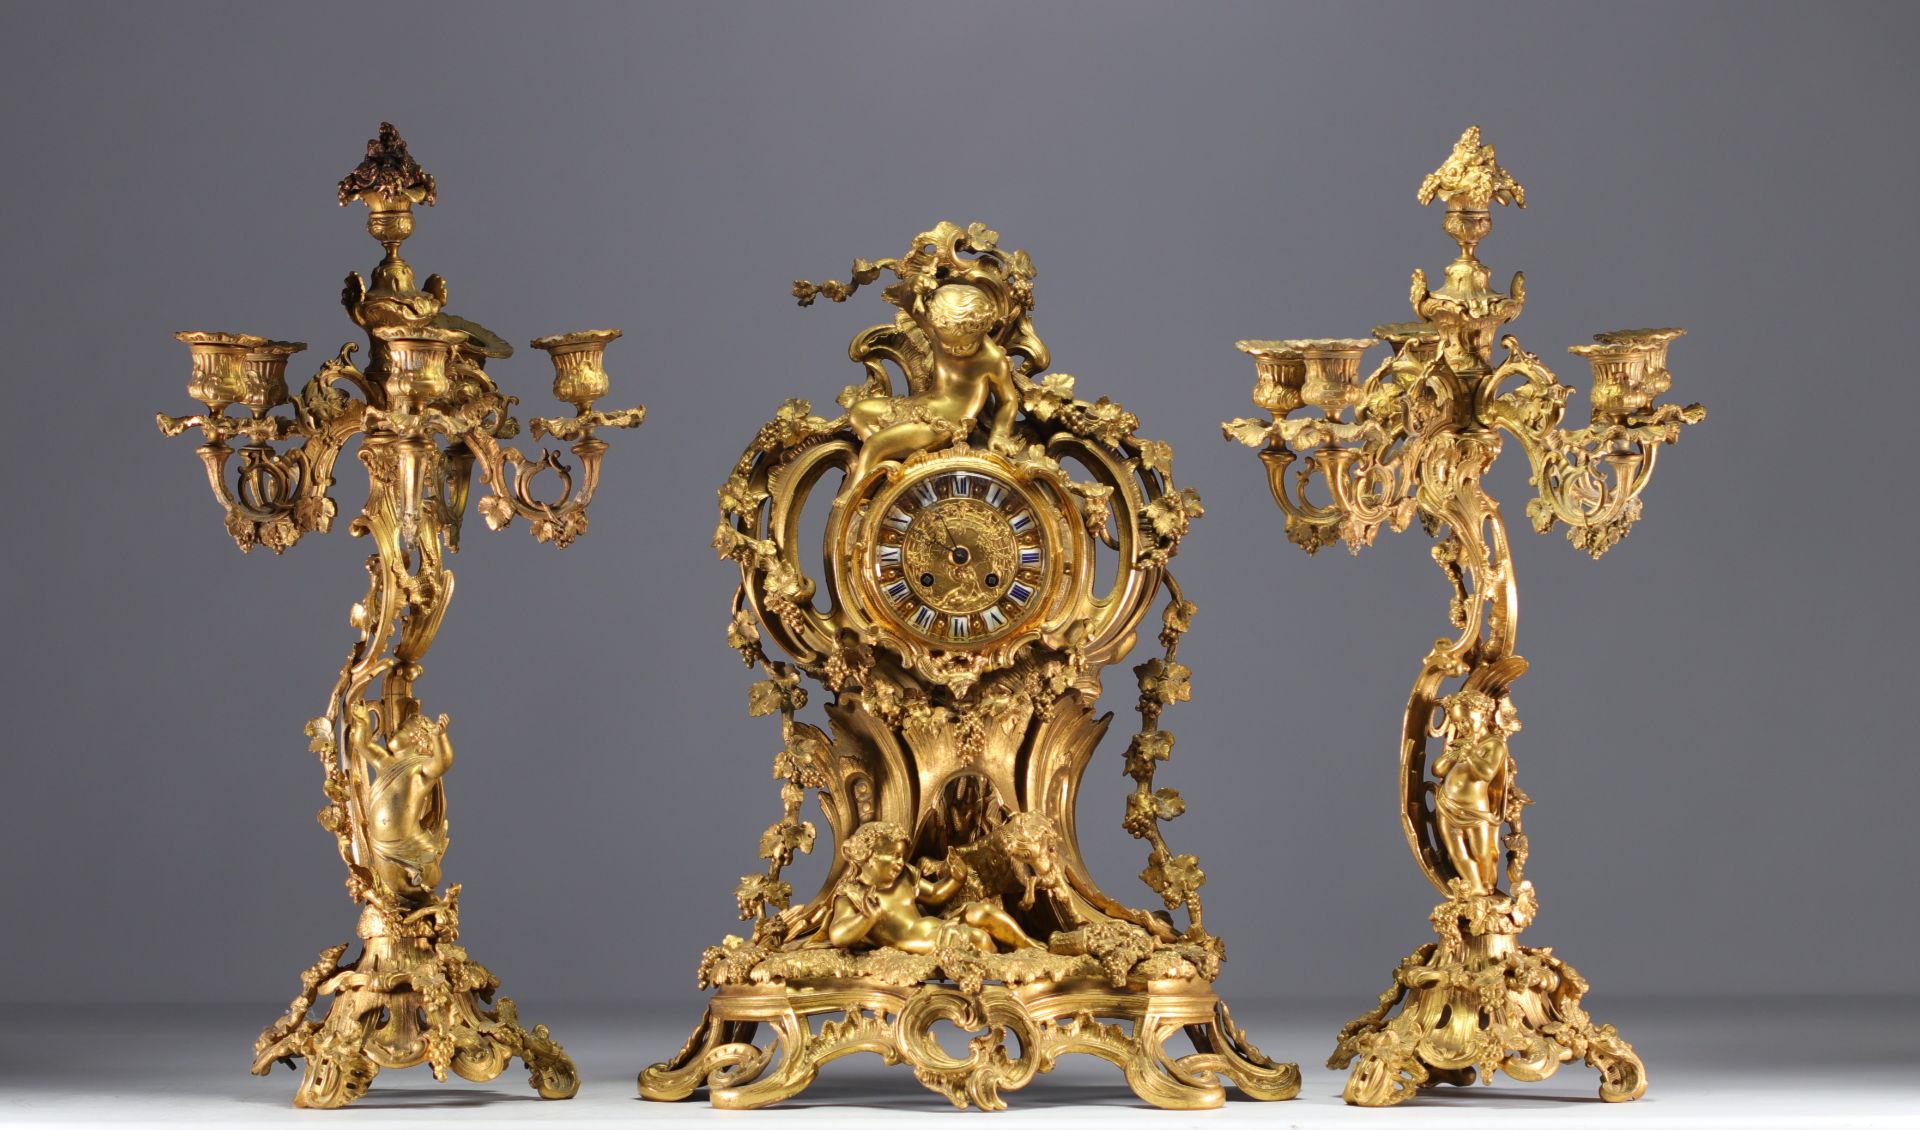 Louis XV style gilt bronze mantelpiece and candelabra, 19th century.